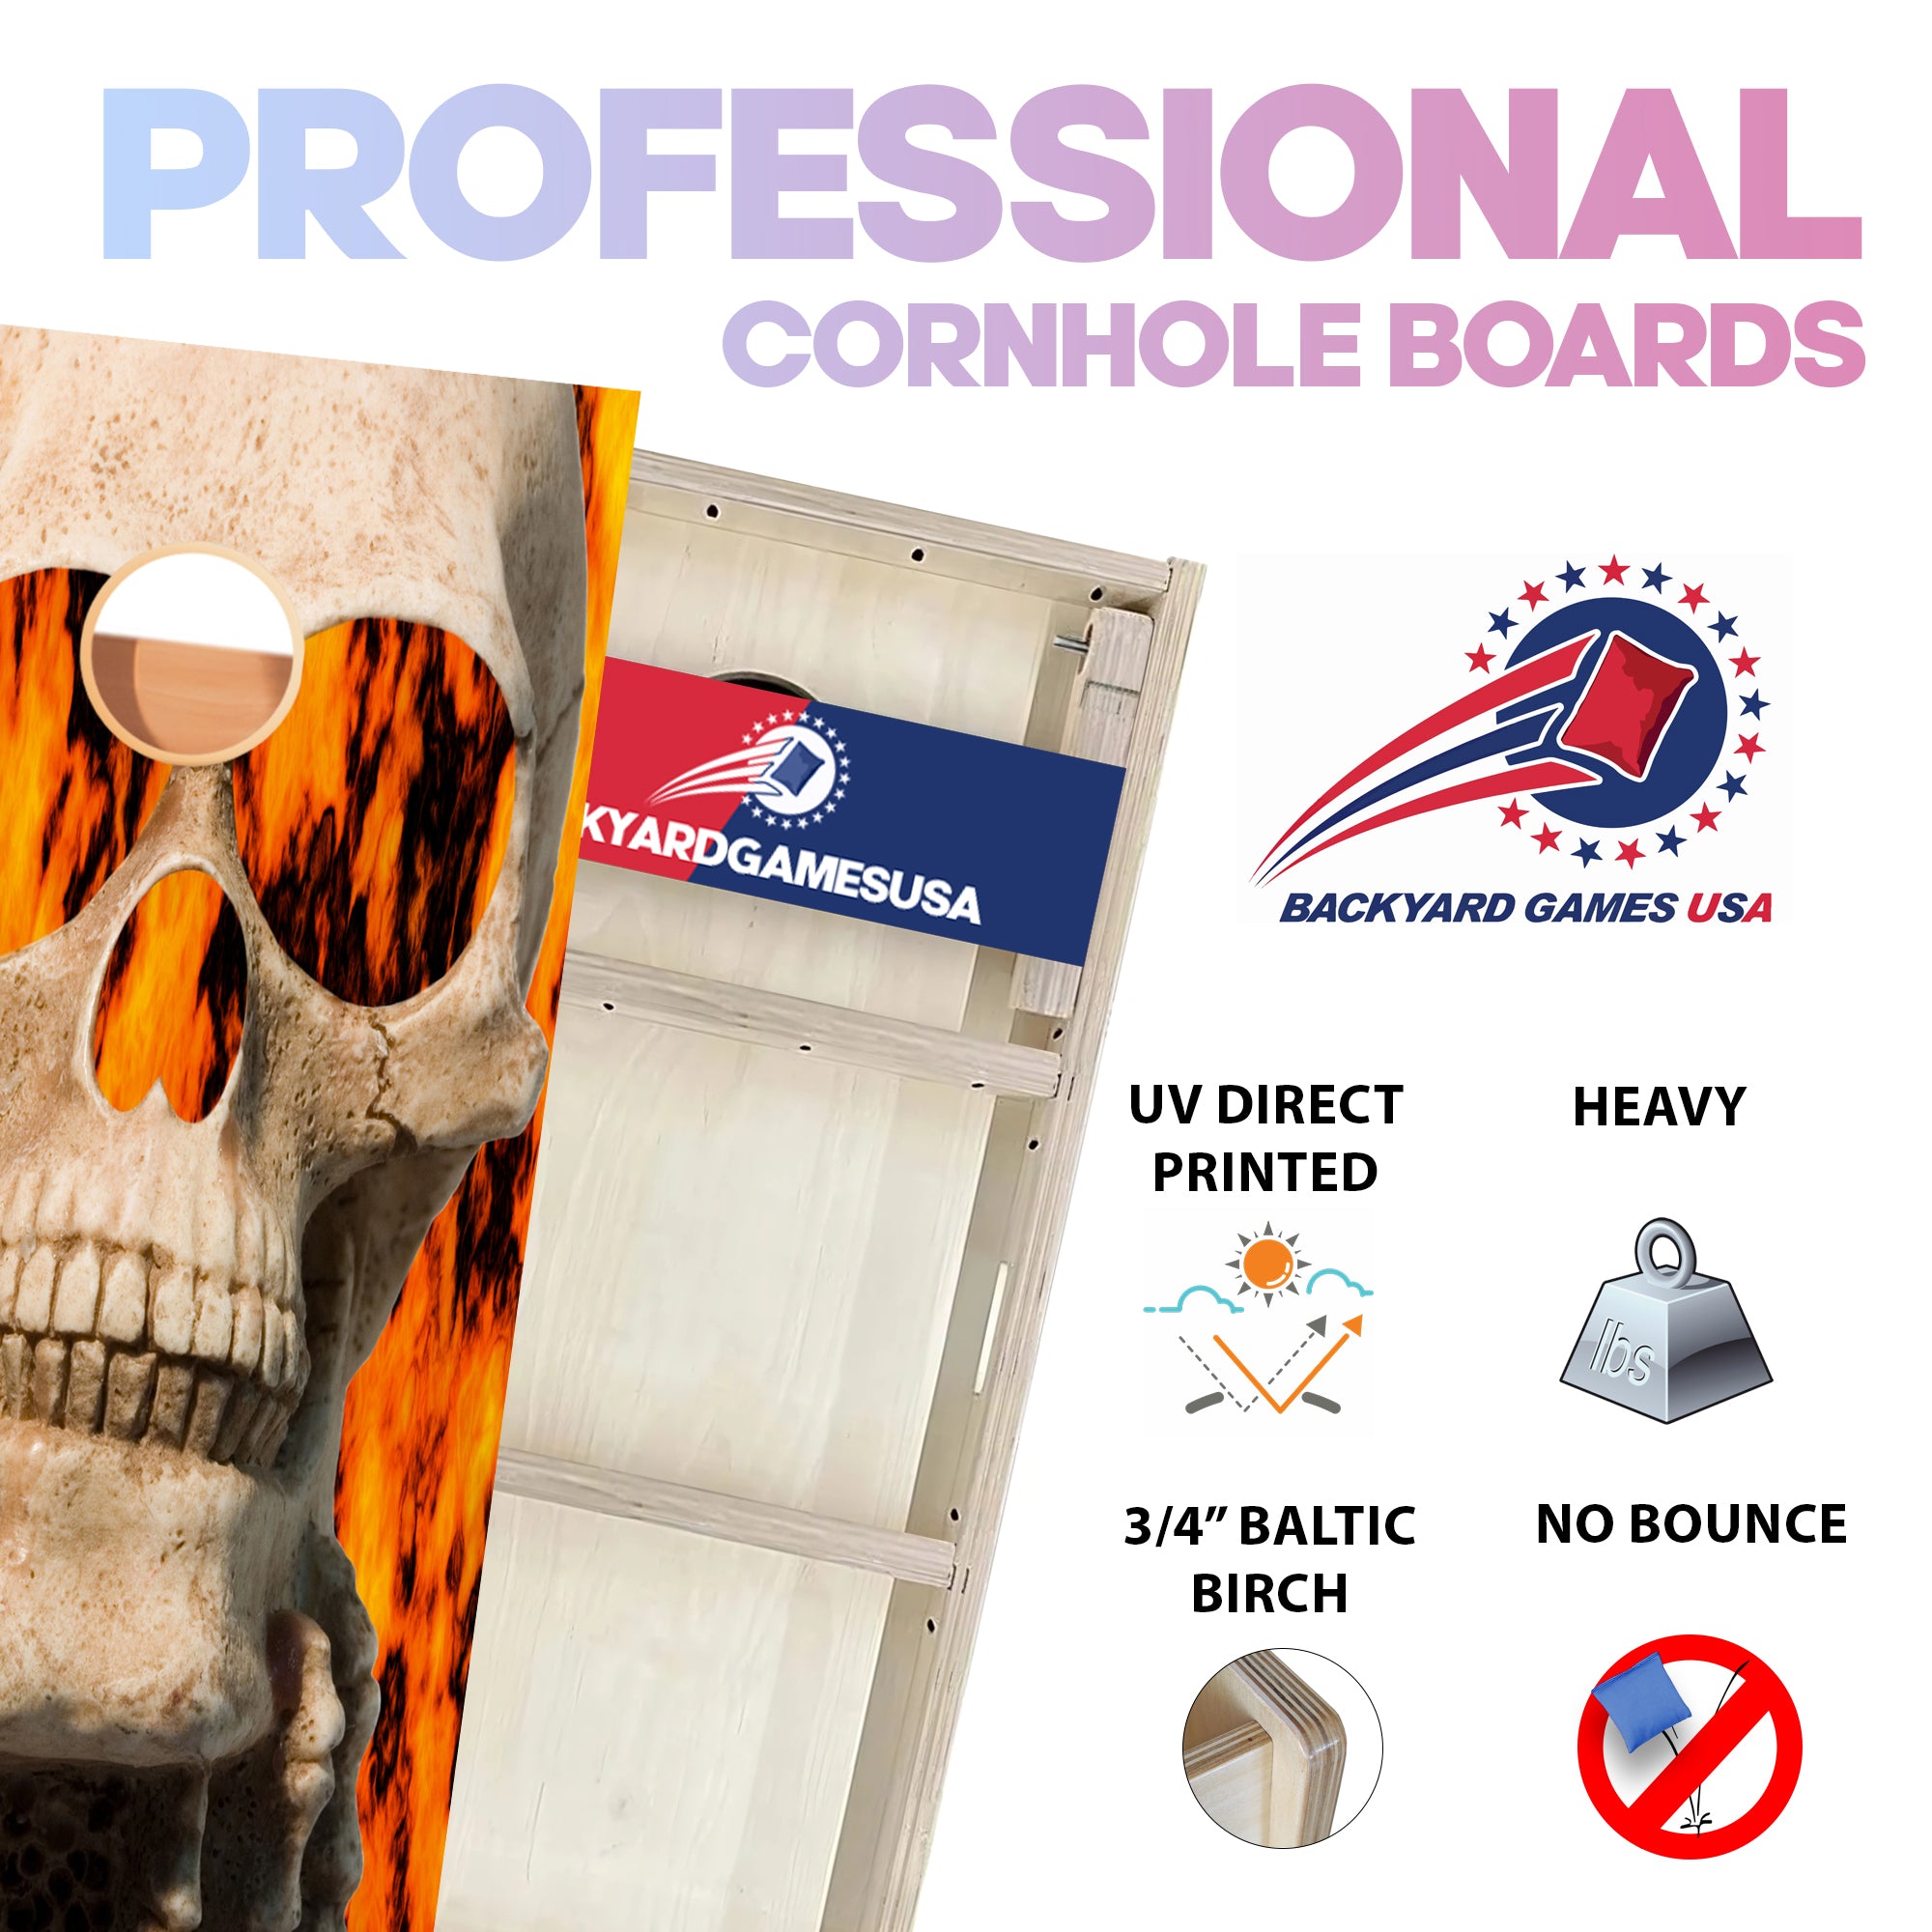 Flaming Skull Professional Cornhole Boards